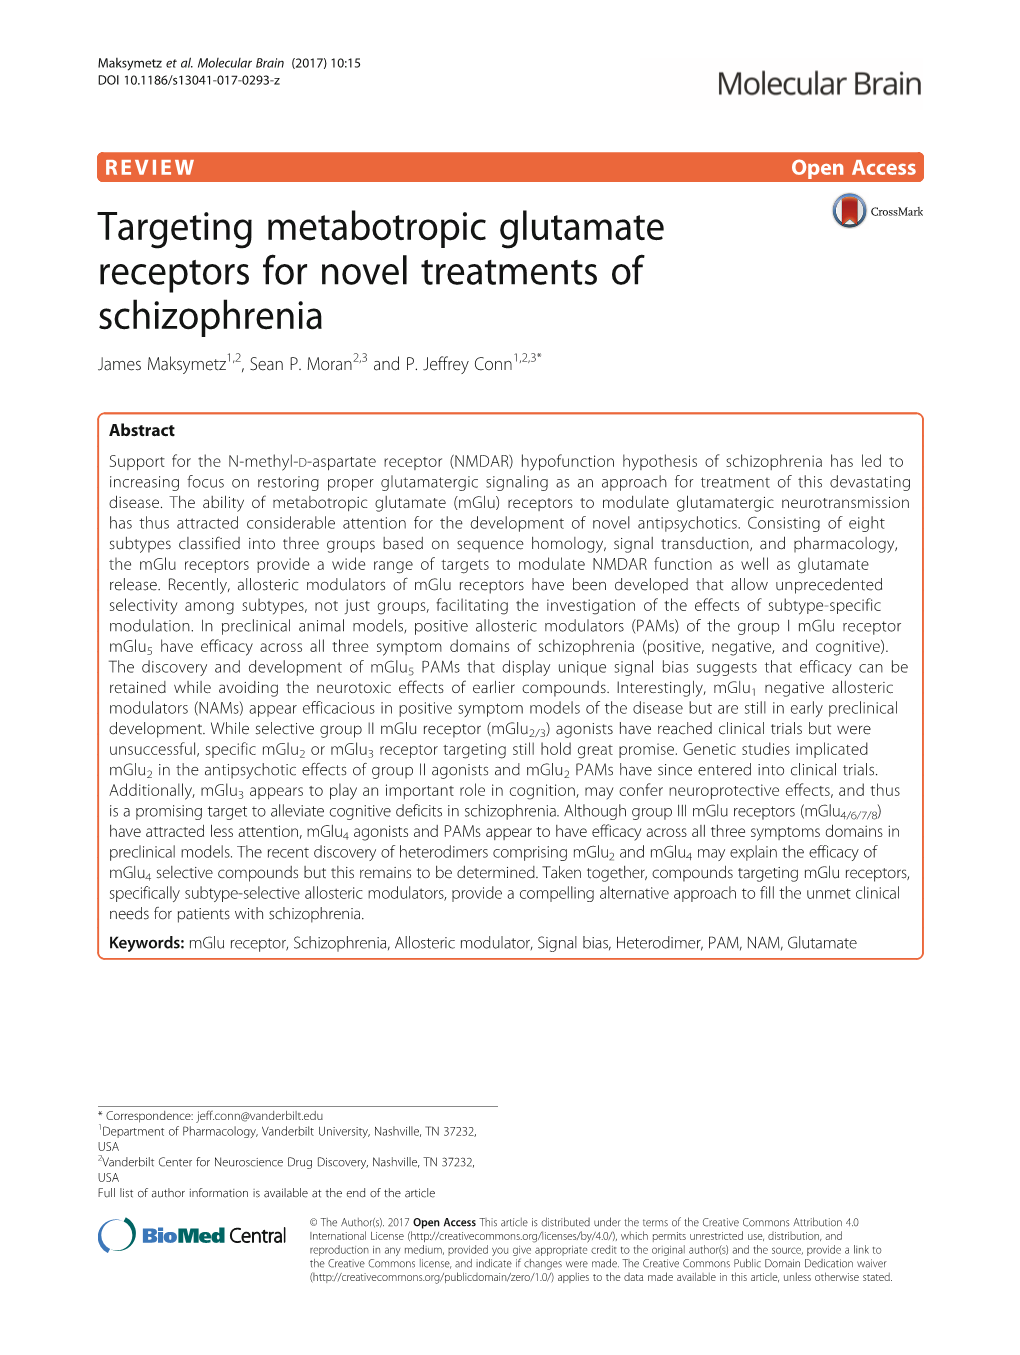 Targeting Metabotropic Glutamate Receptors for Novel Treatments of Schizophrenia James Maksymetz1,2, Sean P